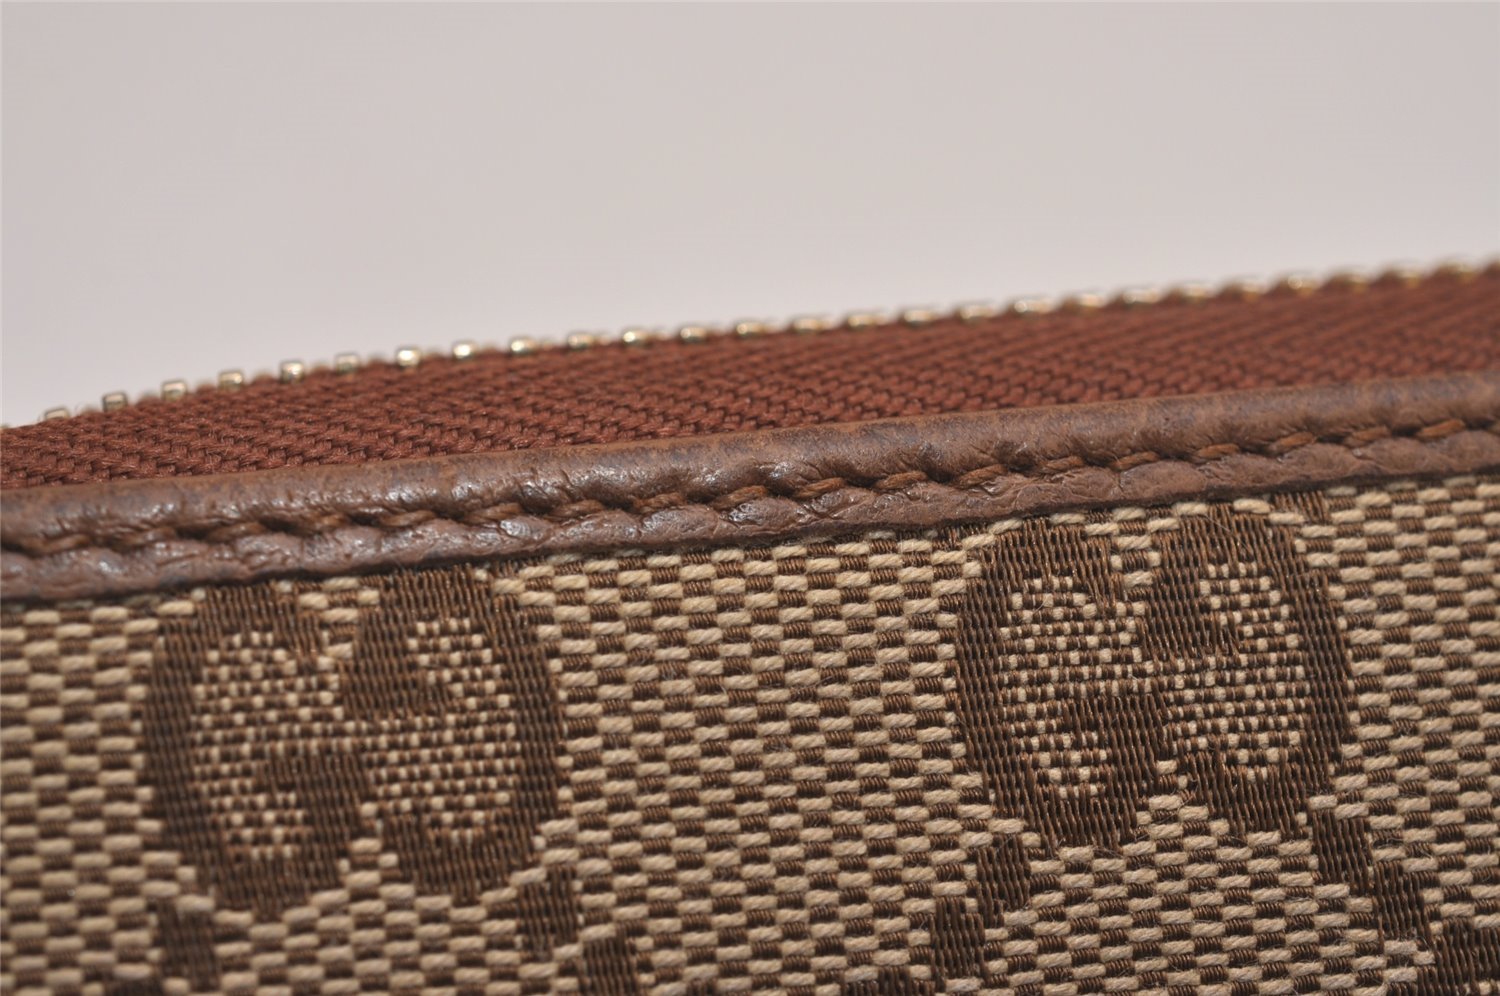 Authentic GUCCI Vintage Long Wallet Purse GG Canvas Leather 363423 Brown 4085J